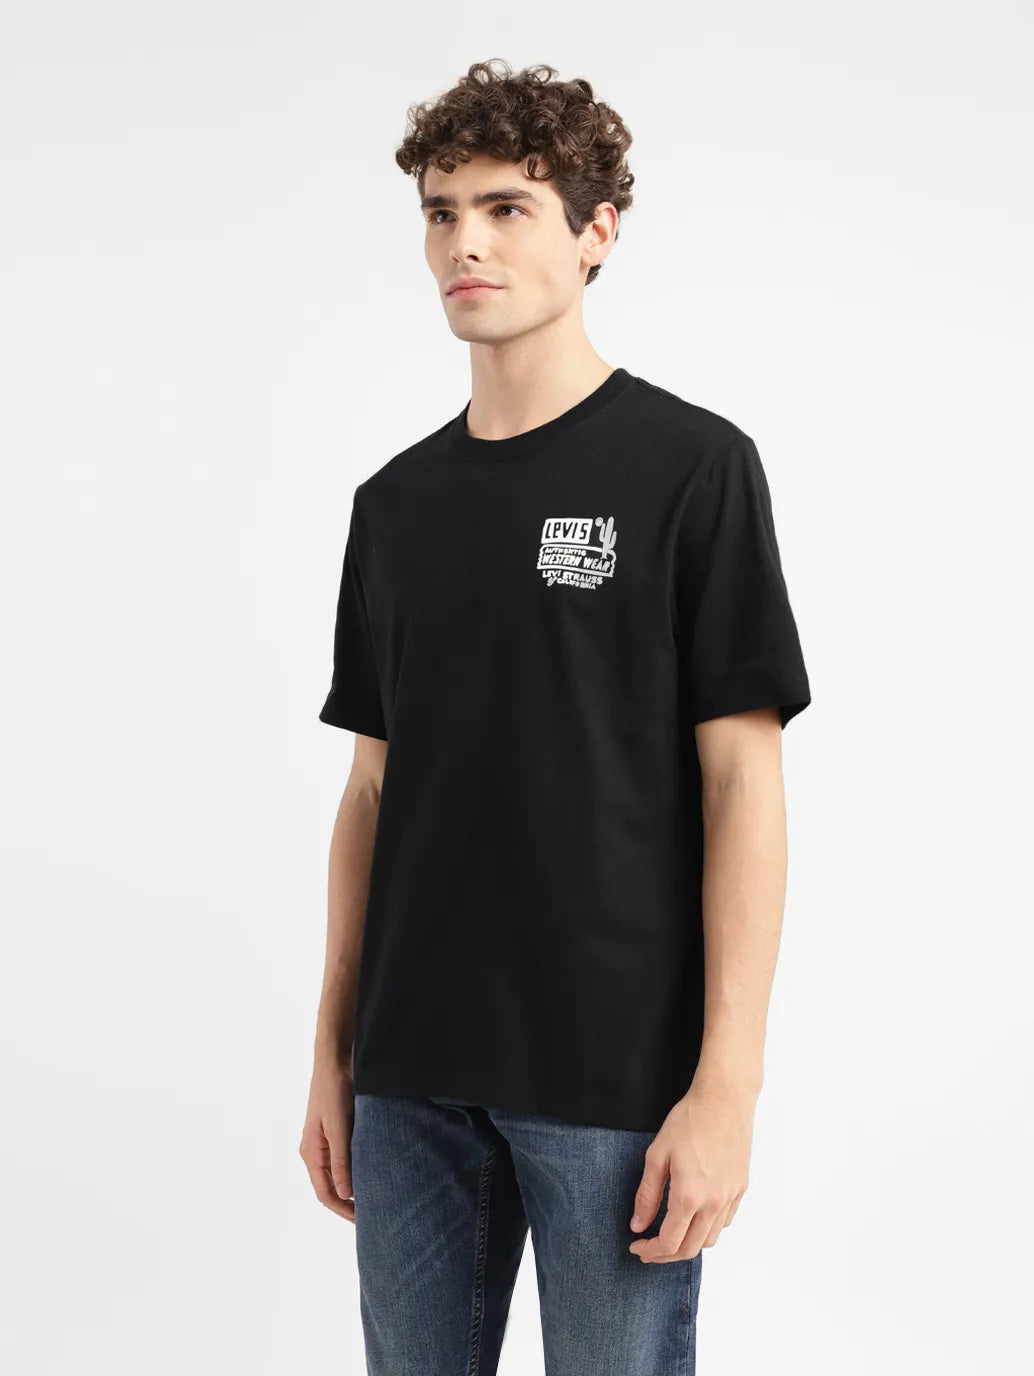 Men's Printed Crew Neck T-shirts